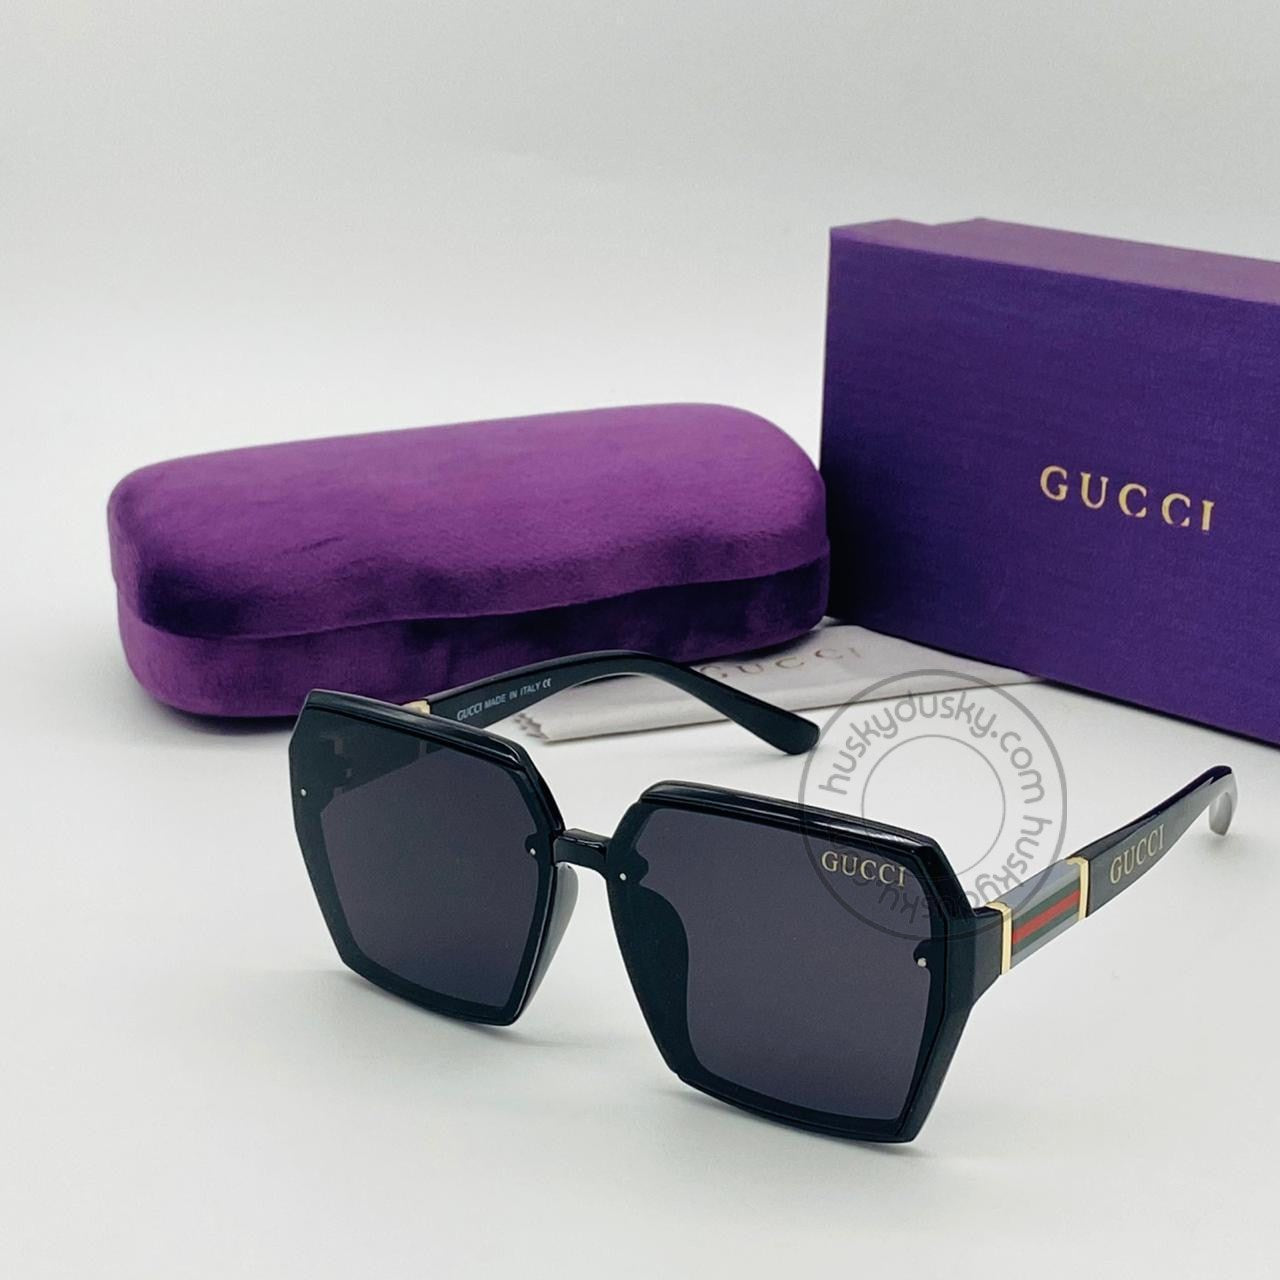 Gucci Branded black Color Design Glass Men's Women's Sunglass for Man Woman or Girl GU-700 Black Stick Gift Sunglass